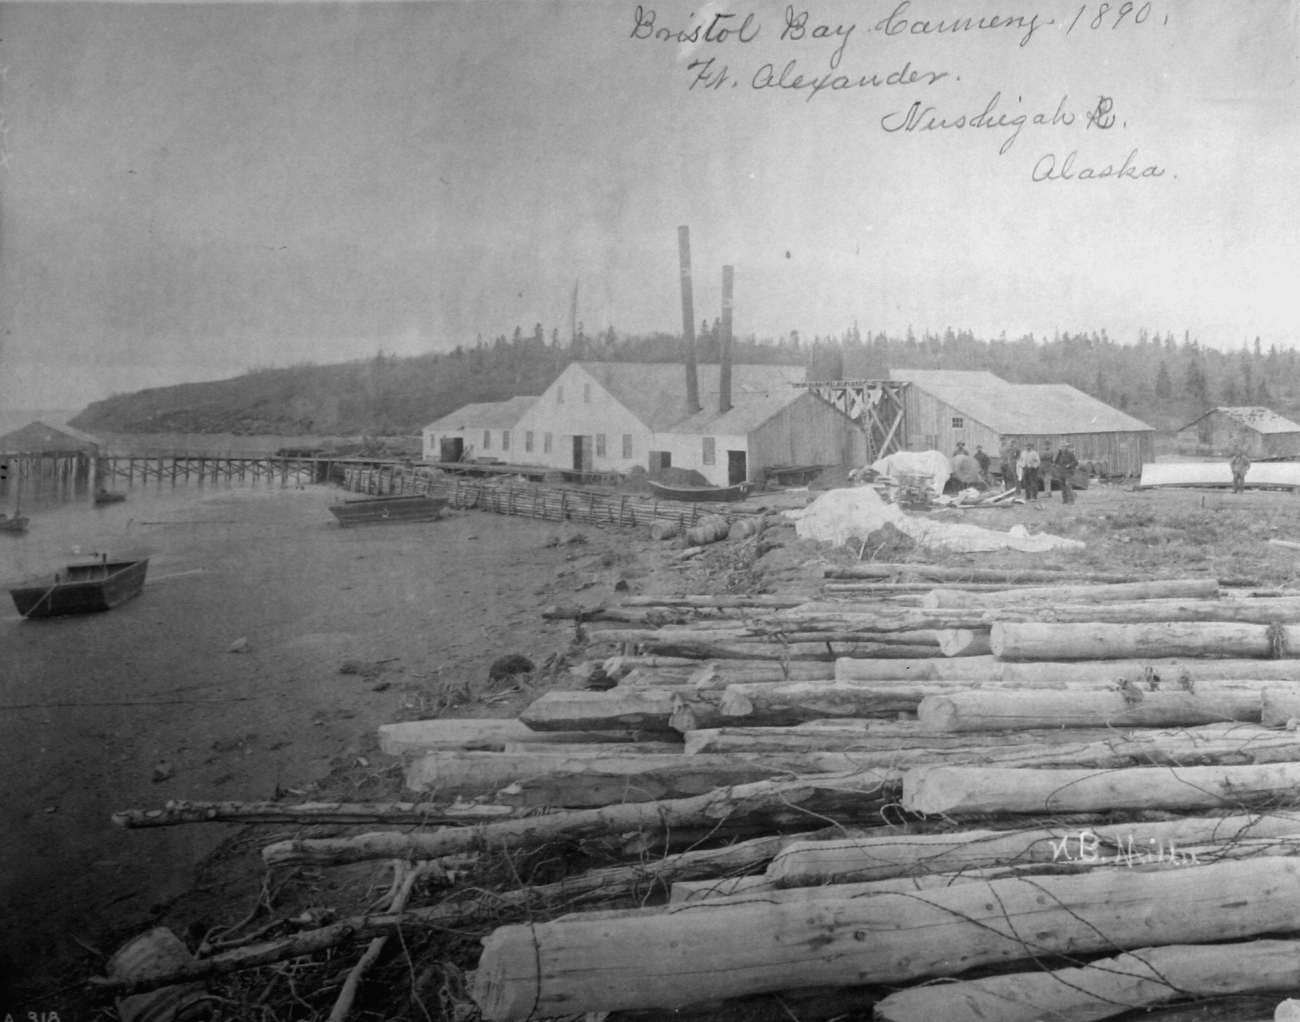 Bristol Bay cannery, Fort Alexander, Nushigah River, AK, 1890